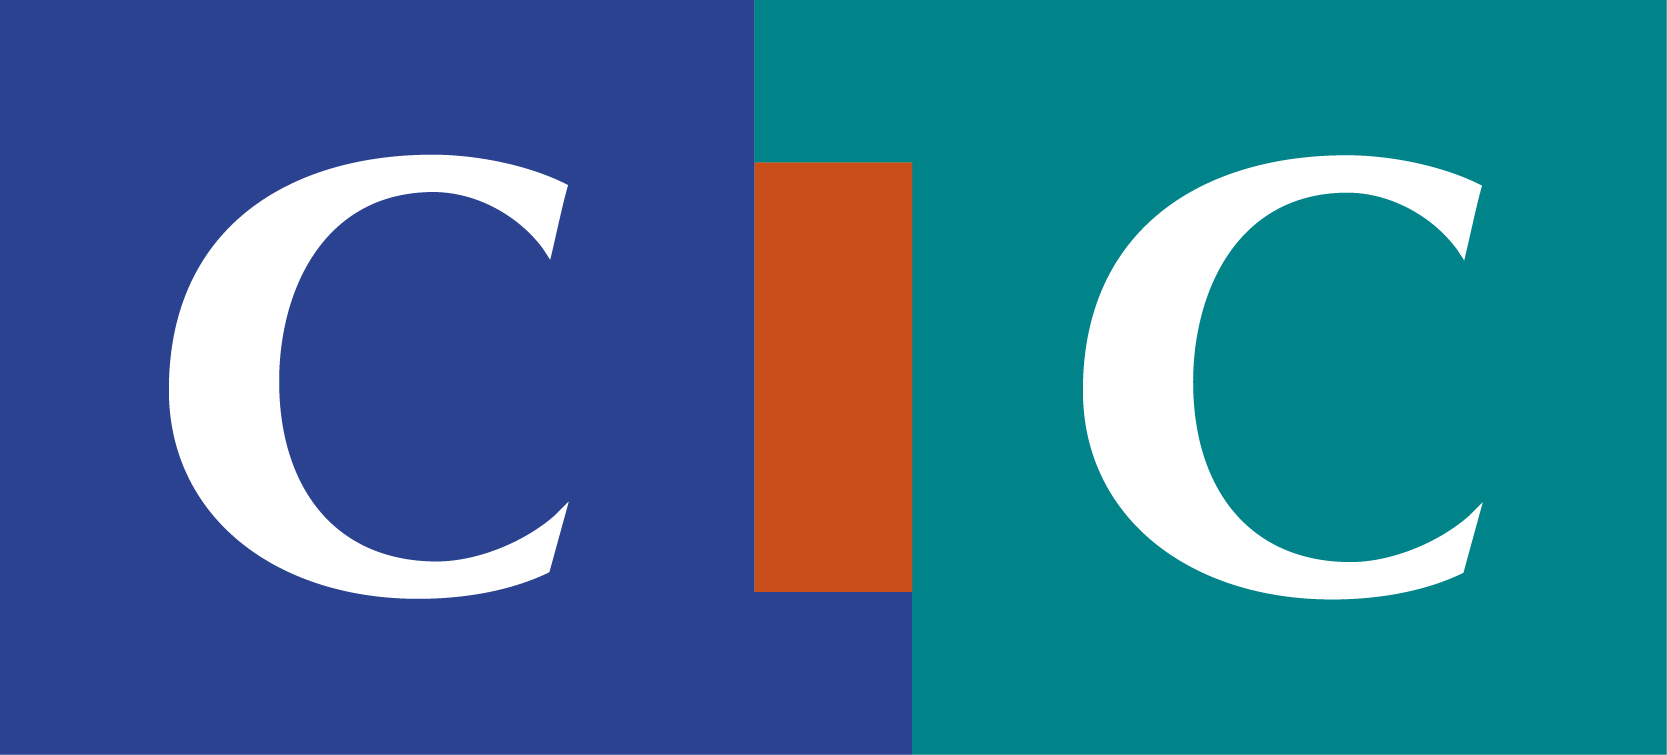 CIC Logo [Credit Industriel et Commercial] png